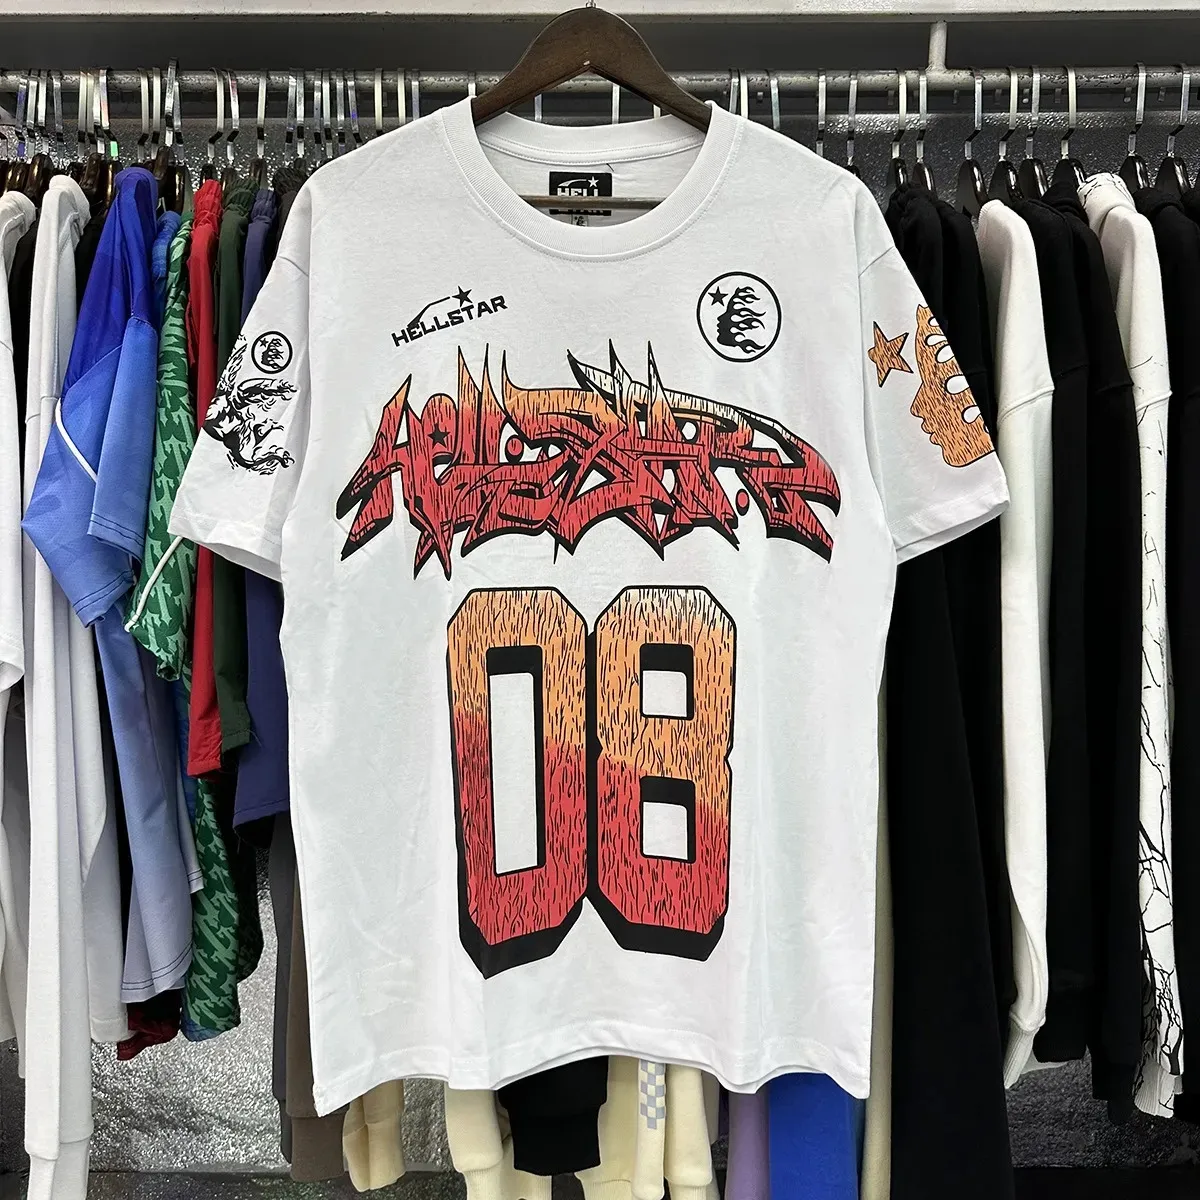 Moda Hellstar Shirt Mens Rappe Top High American Tide Brand Fun Funny Comic Letter Inglês Imprima solta All redonda Cola curta Camiseta camiseta maré